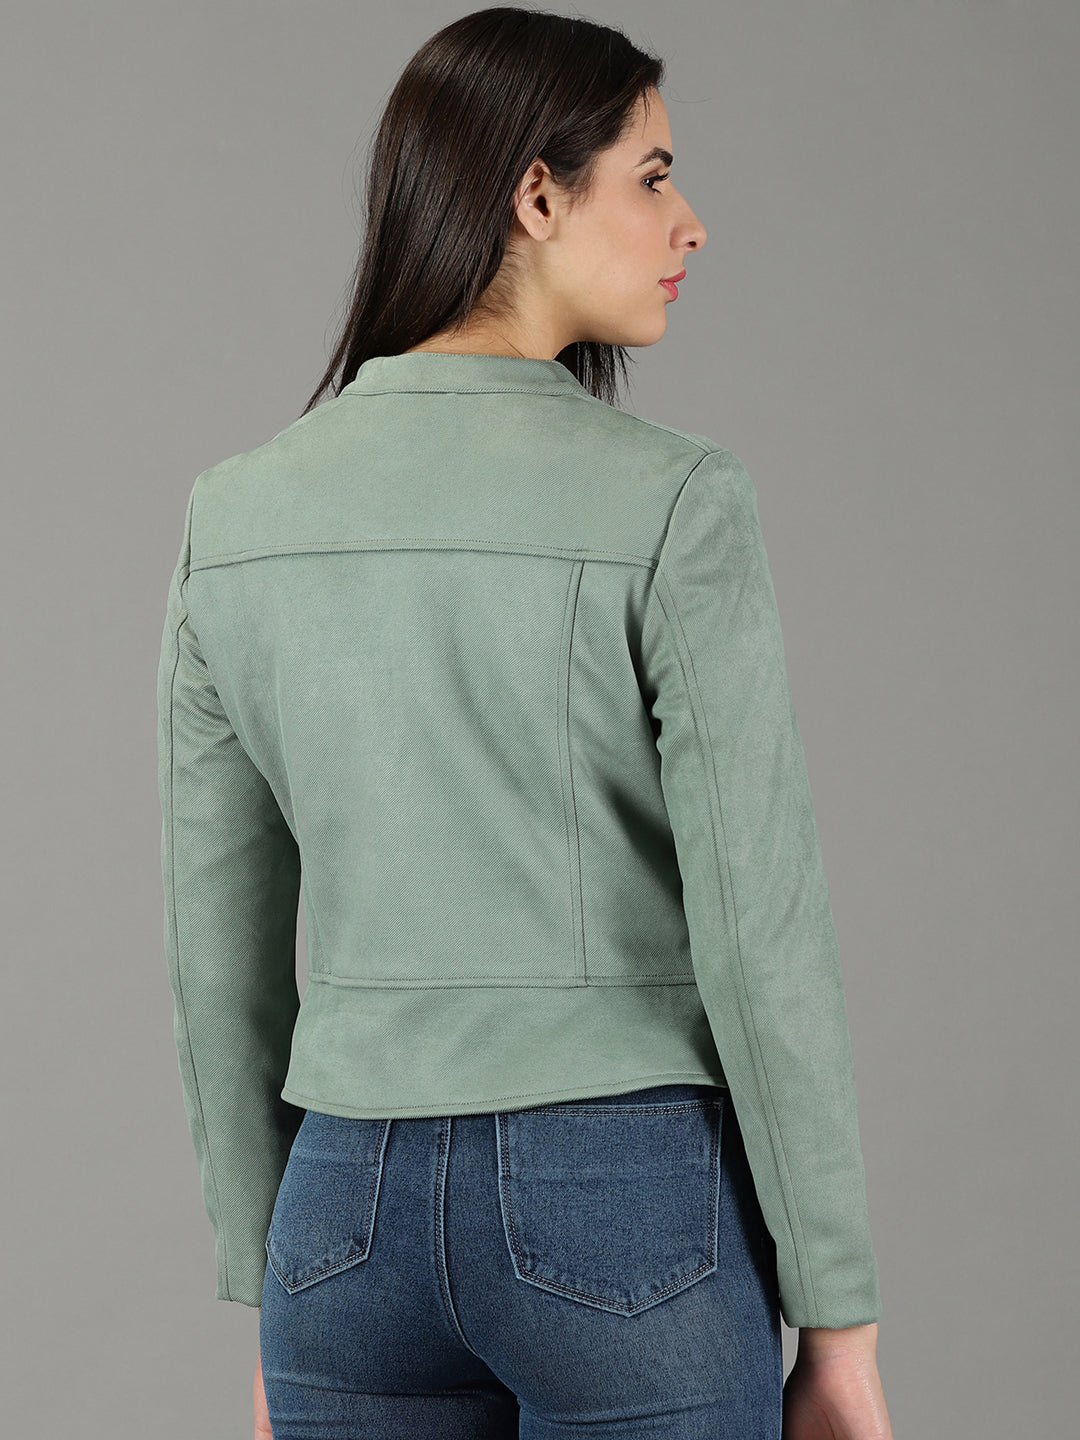 Women's Sea Green Solid Open Front Jacket